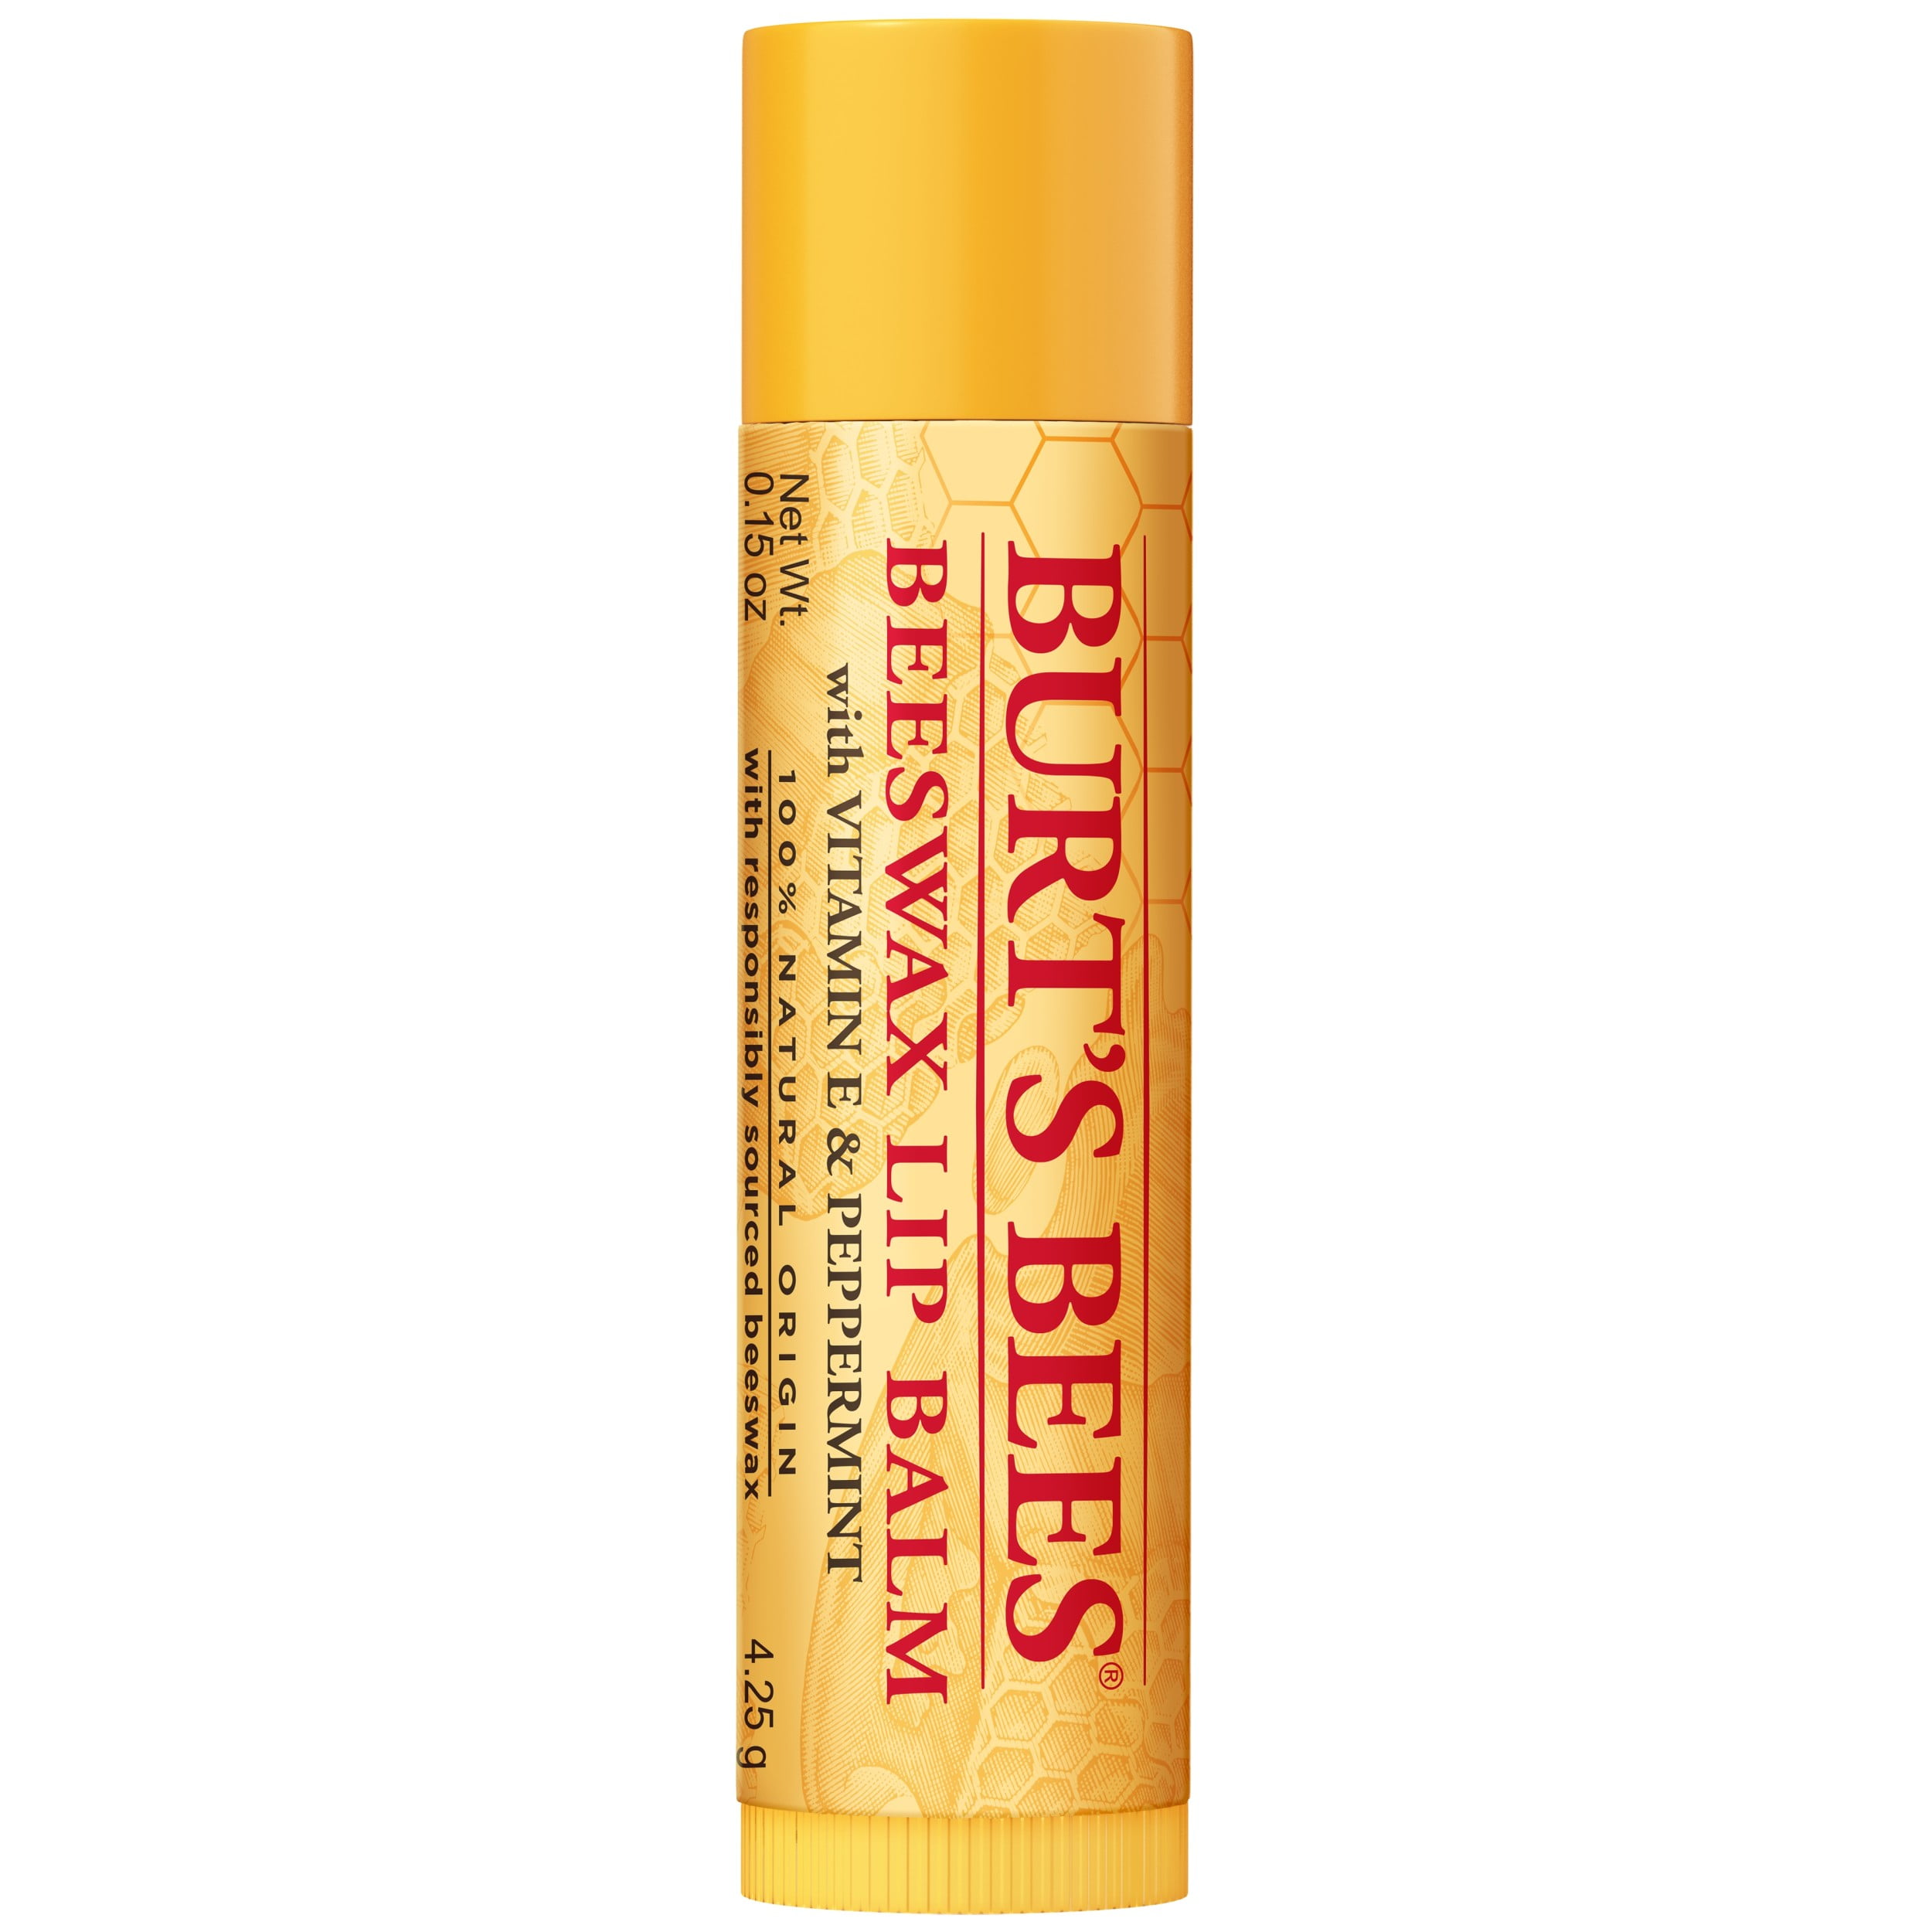 Burt's Bees 100% Natural Moisturizing Lip Balm with Beeswax, Vitamin E & Peppermint Oil, 1 Tube